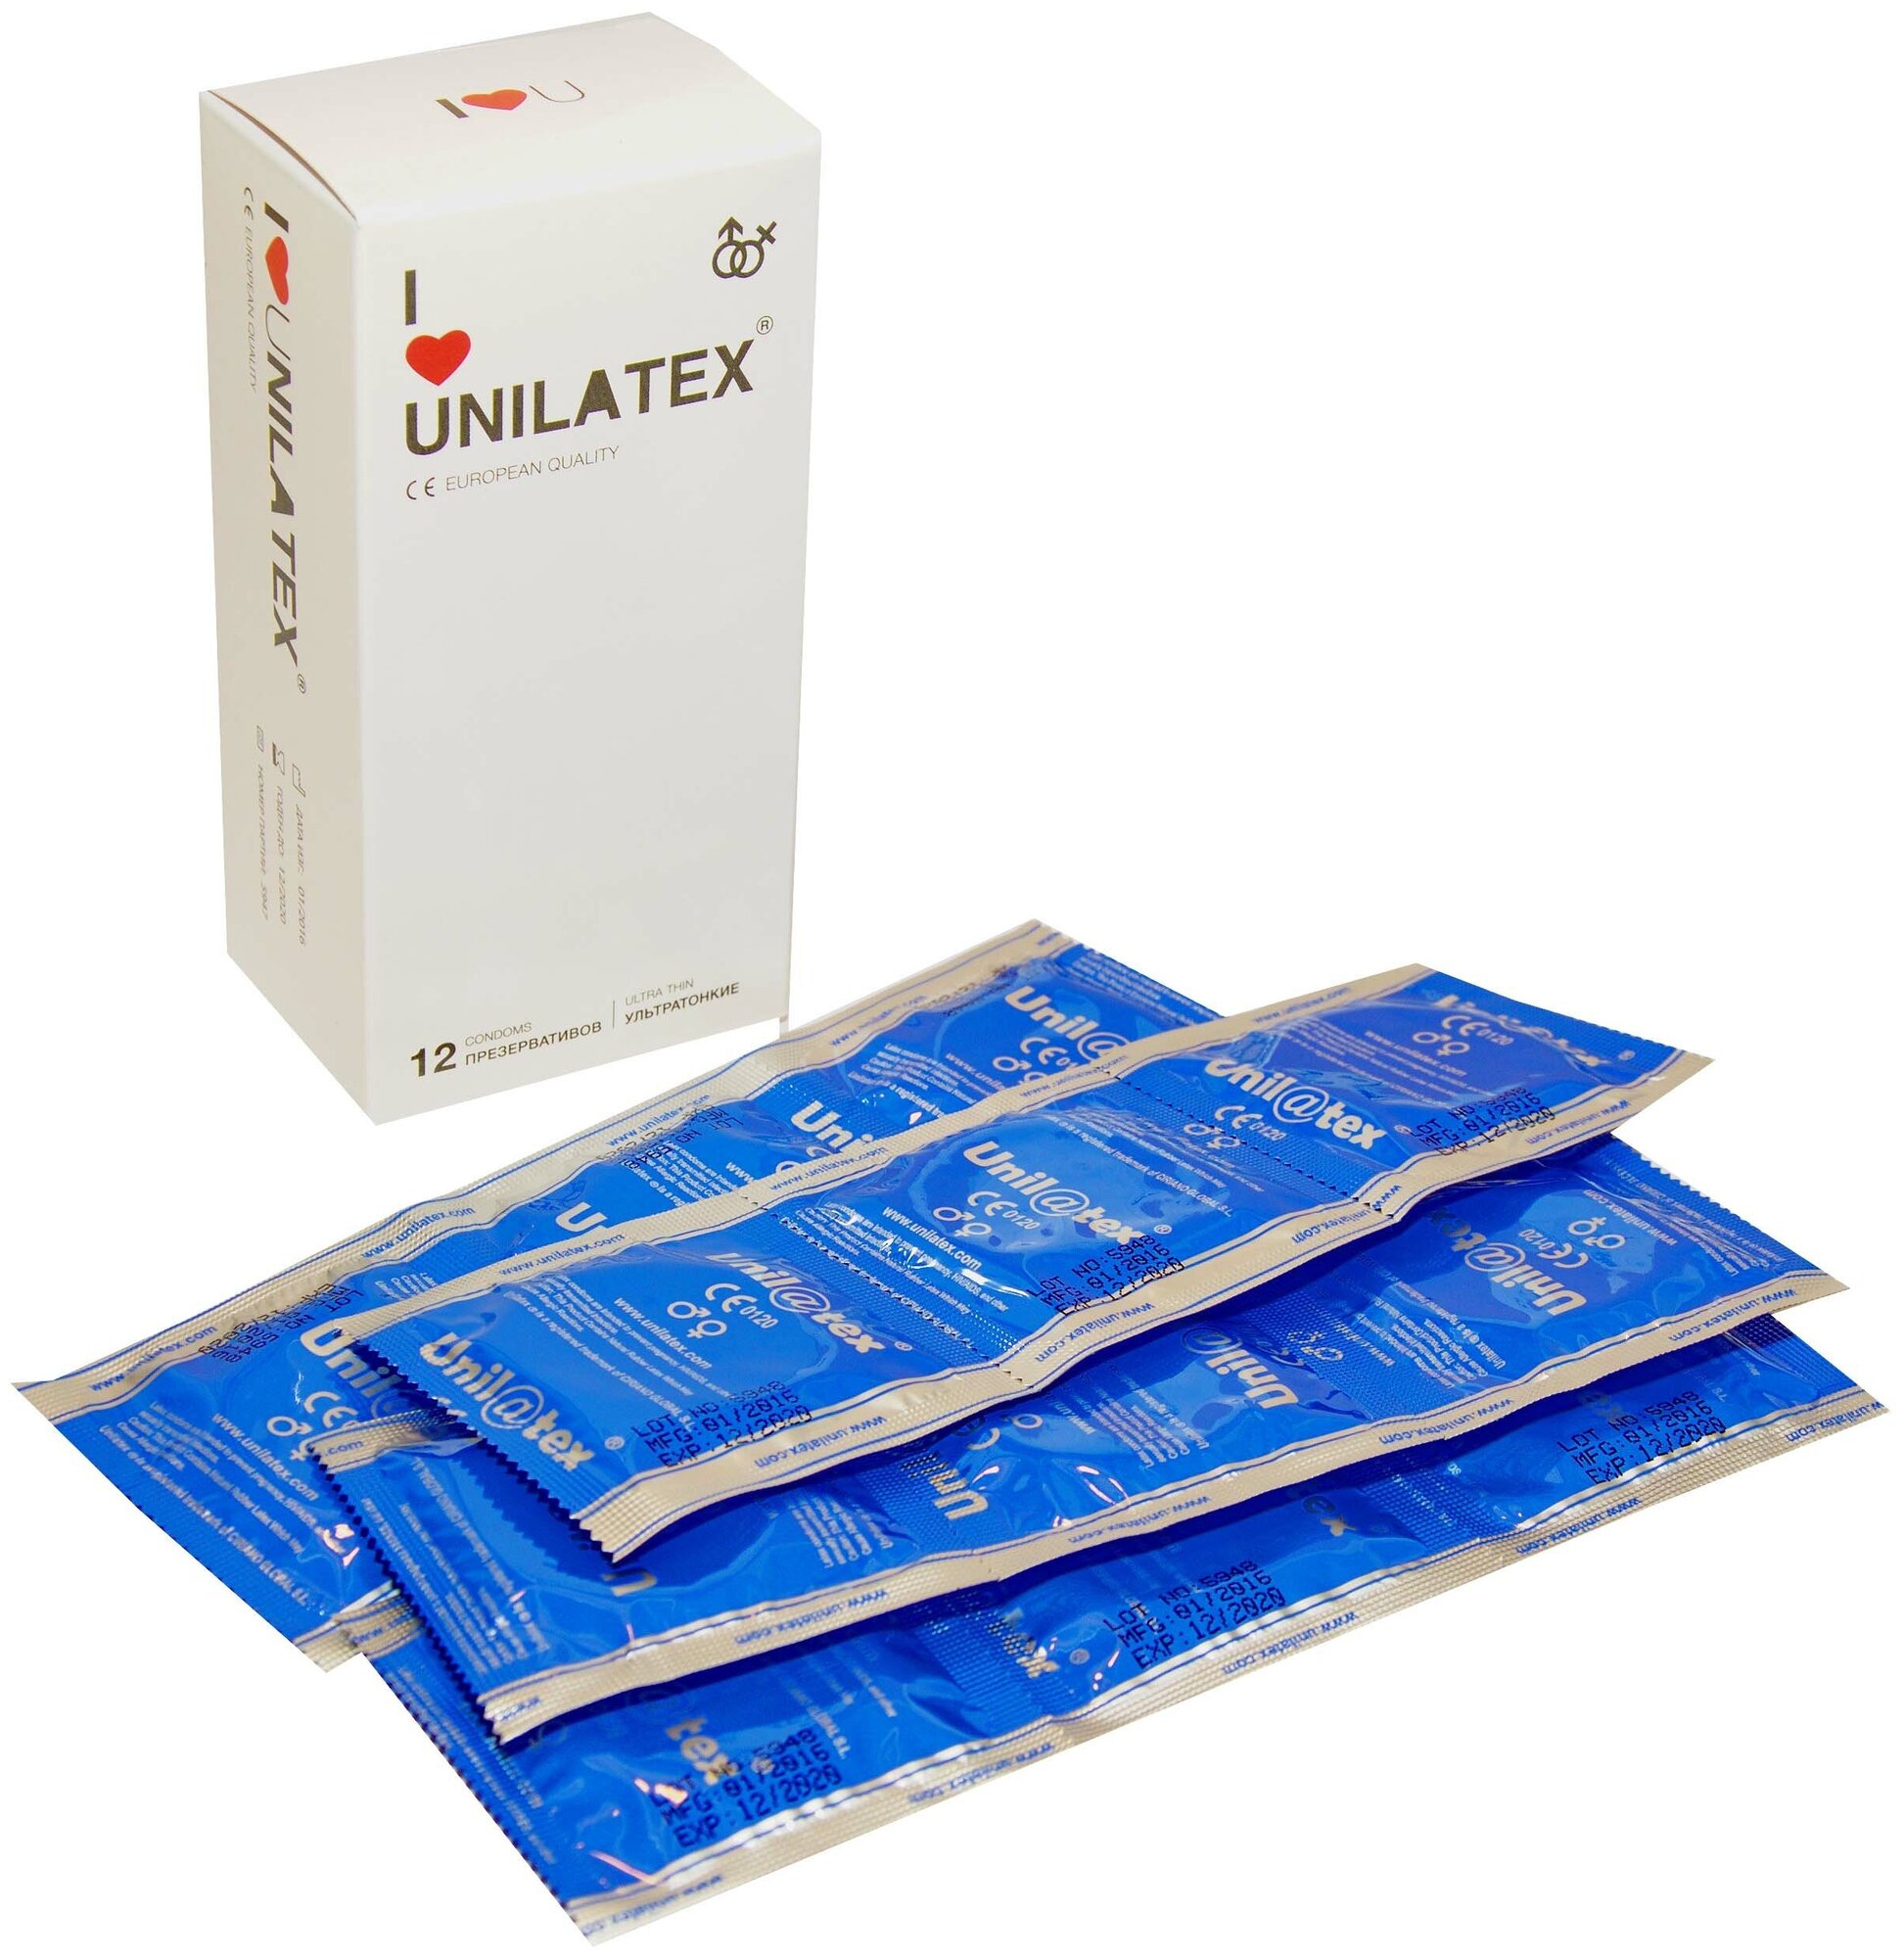   Unilatex Ultra Thin - 12  +  